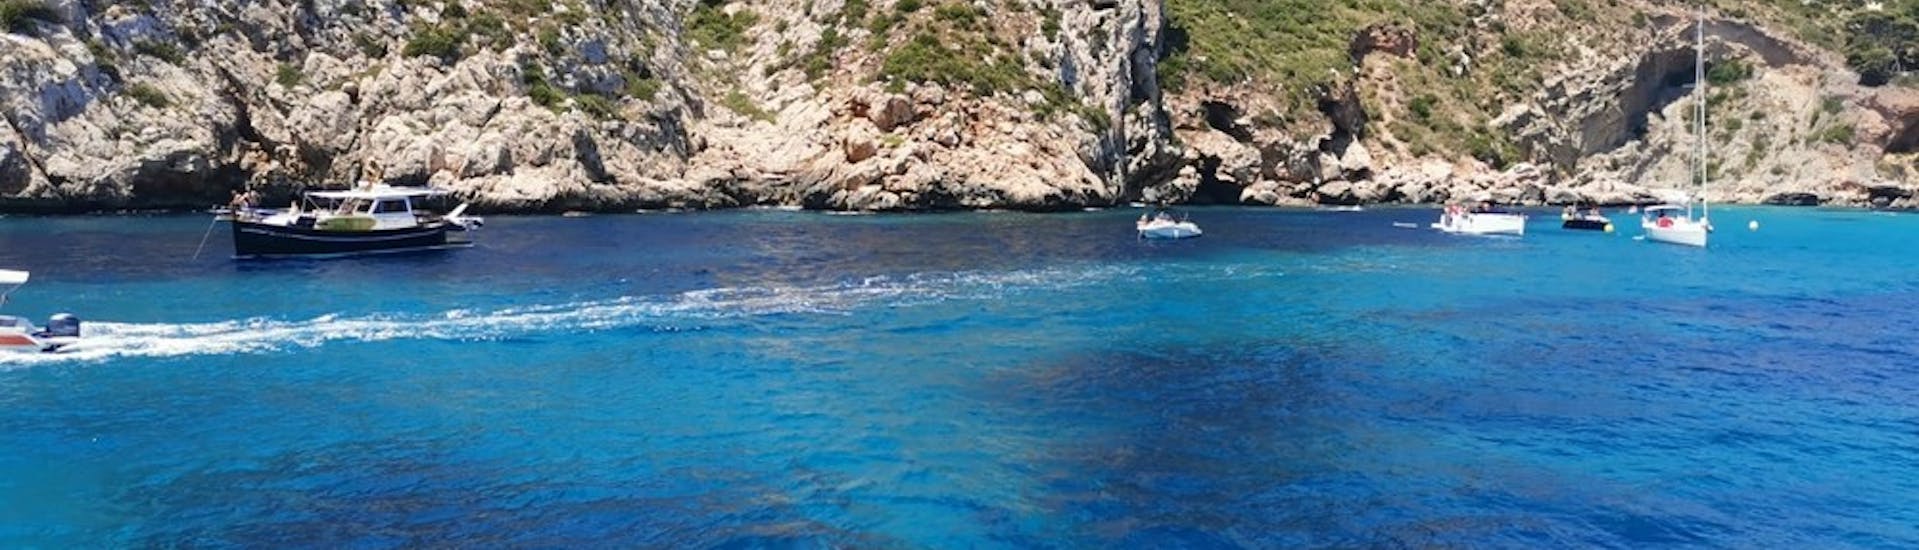 Catamaran Trip to Cova Tallada with Swimming from Denia.